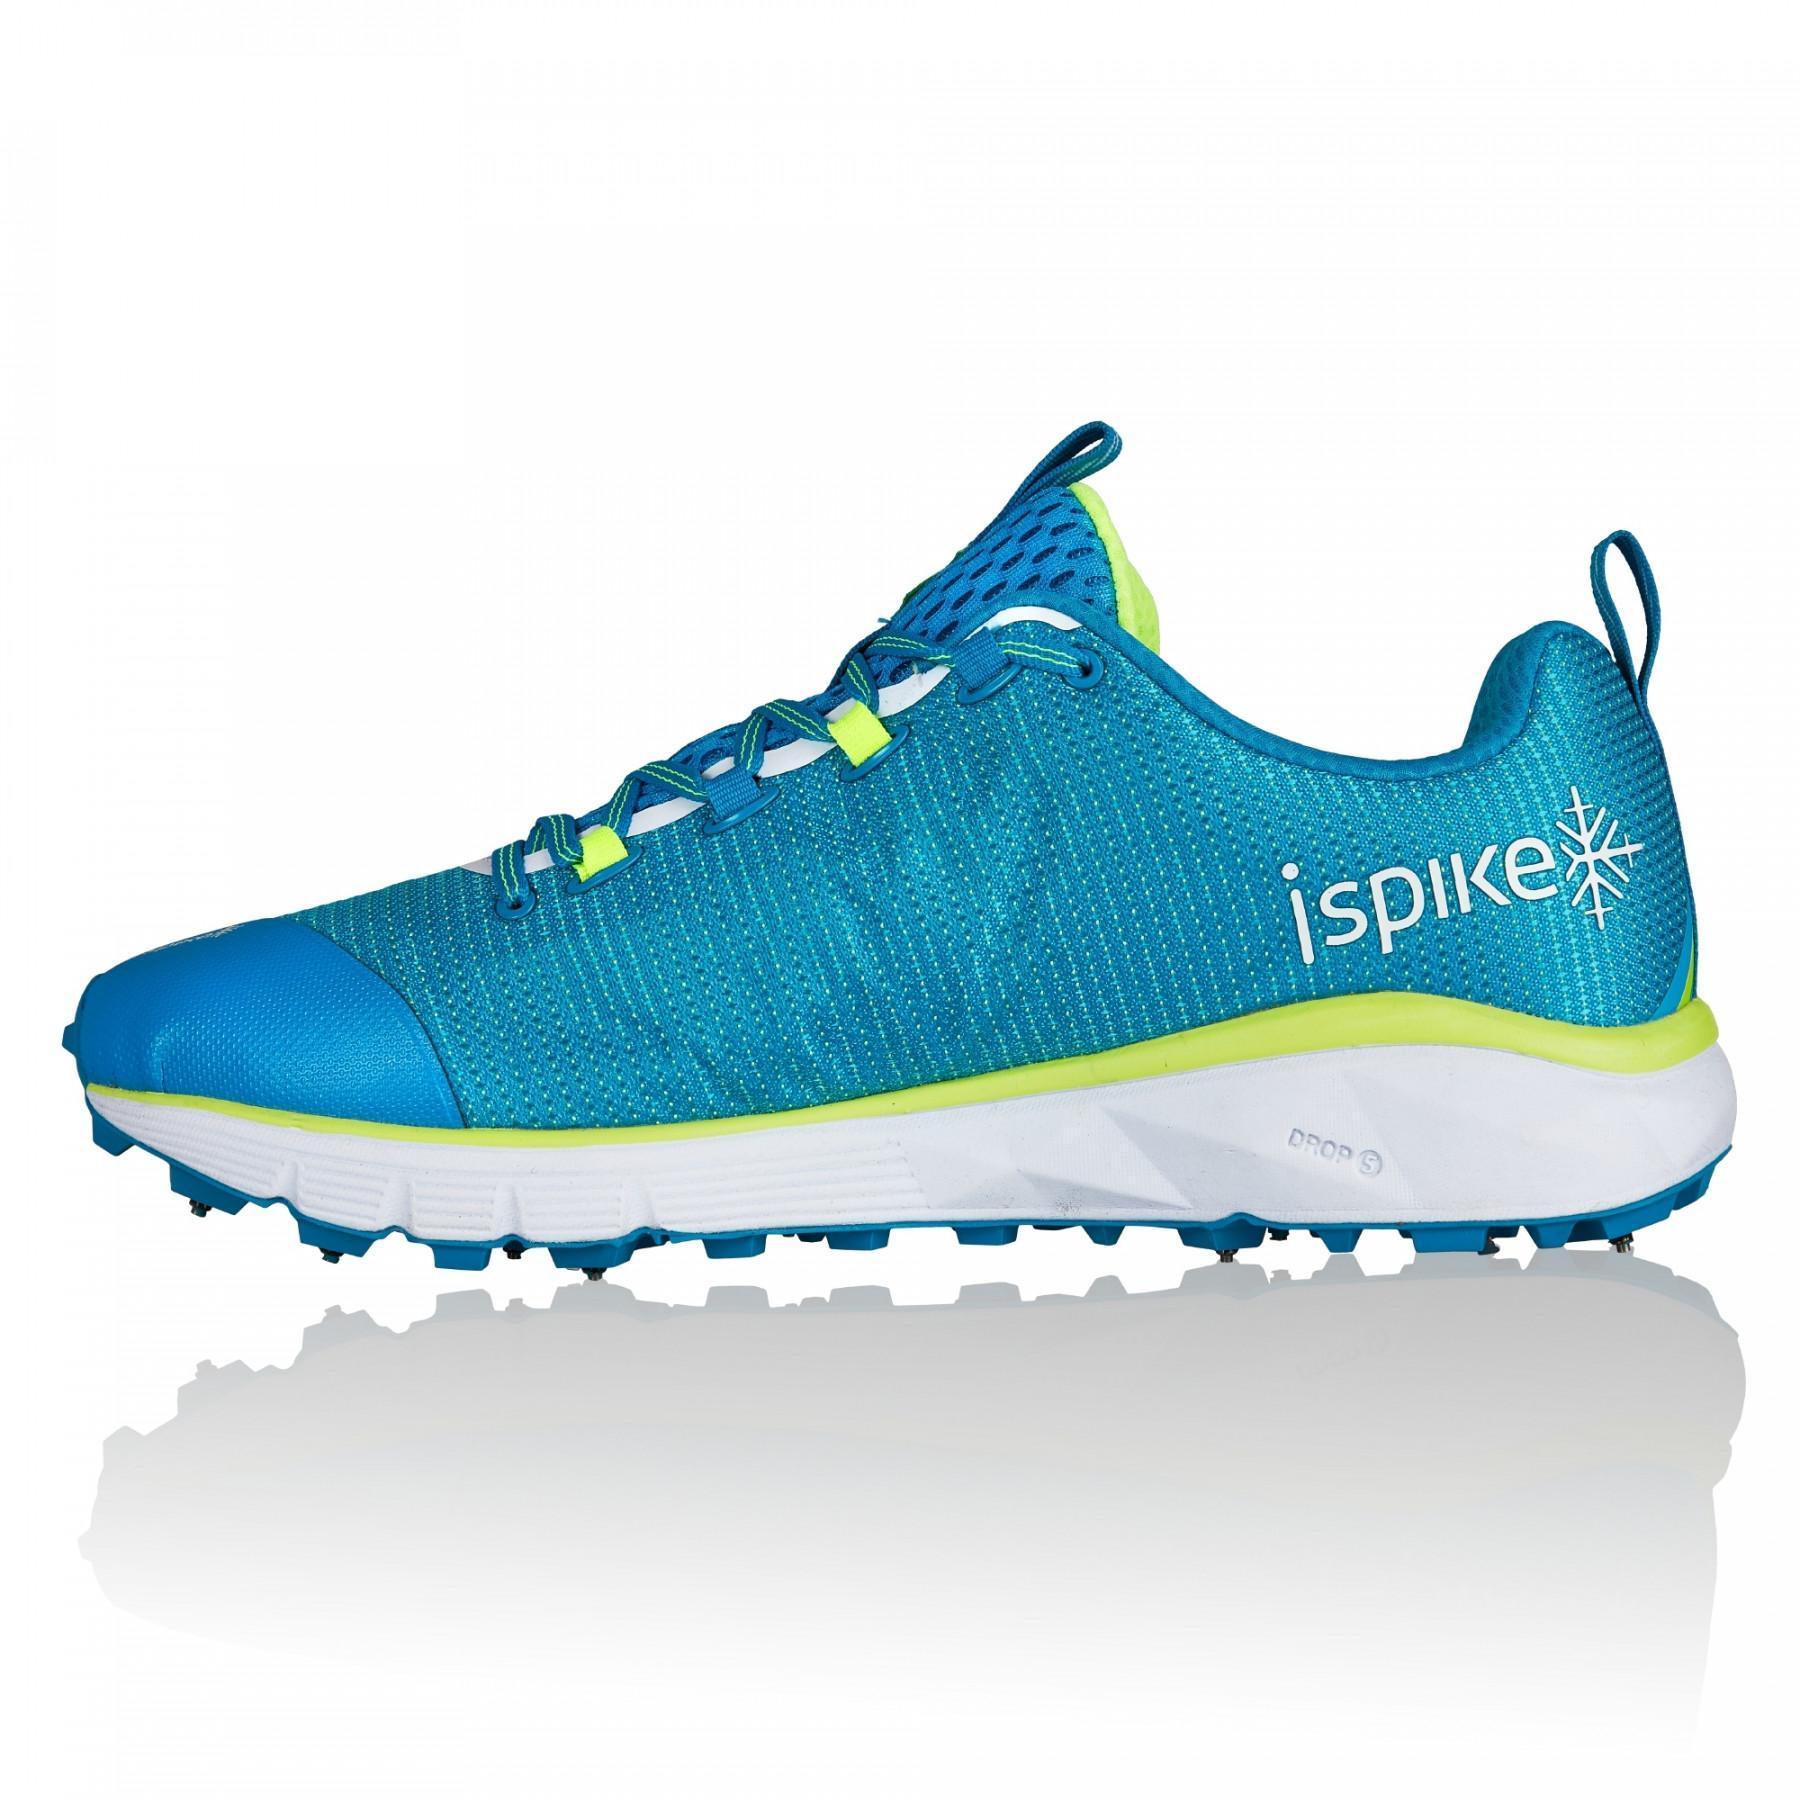 Chaussures de running Salming Ipsike